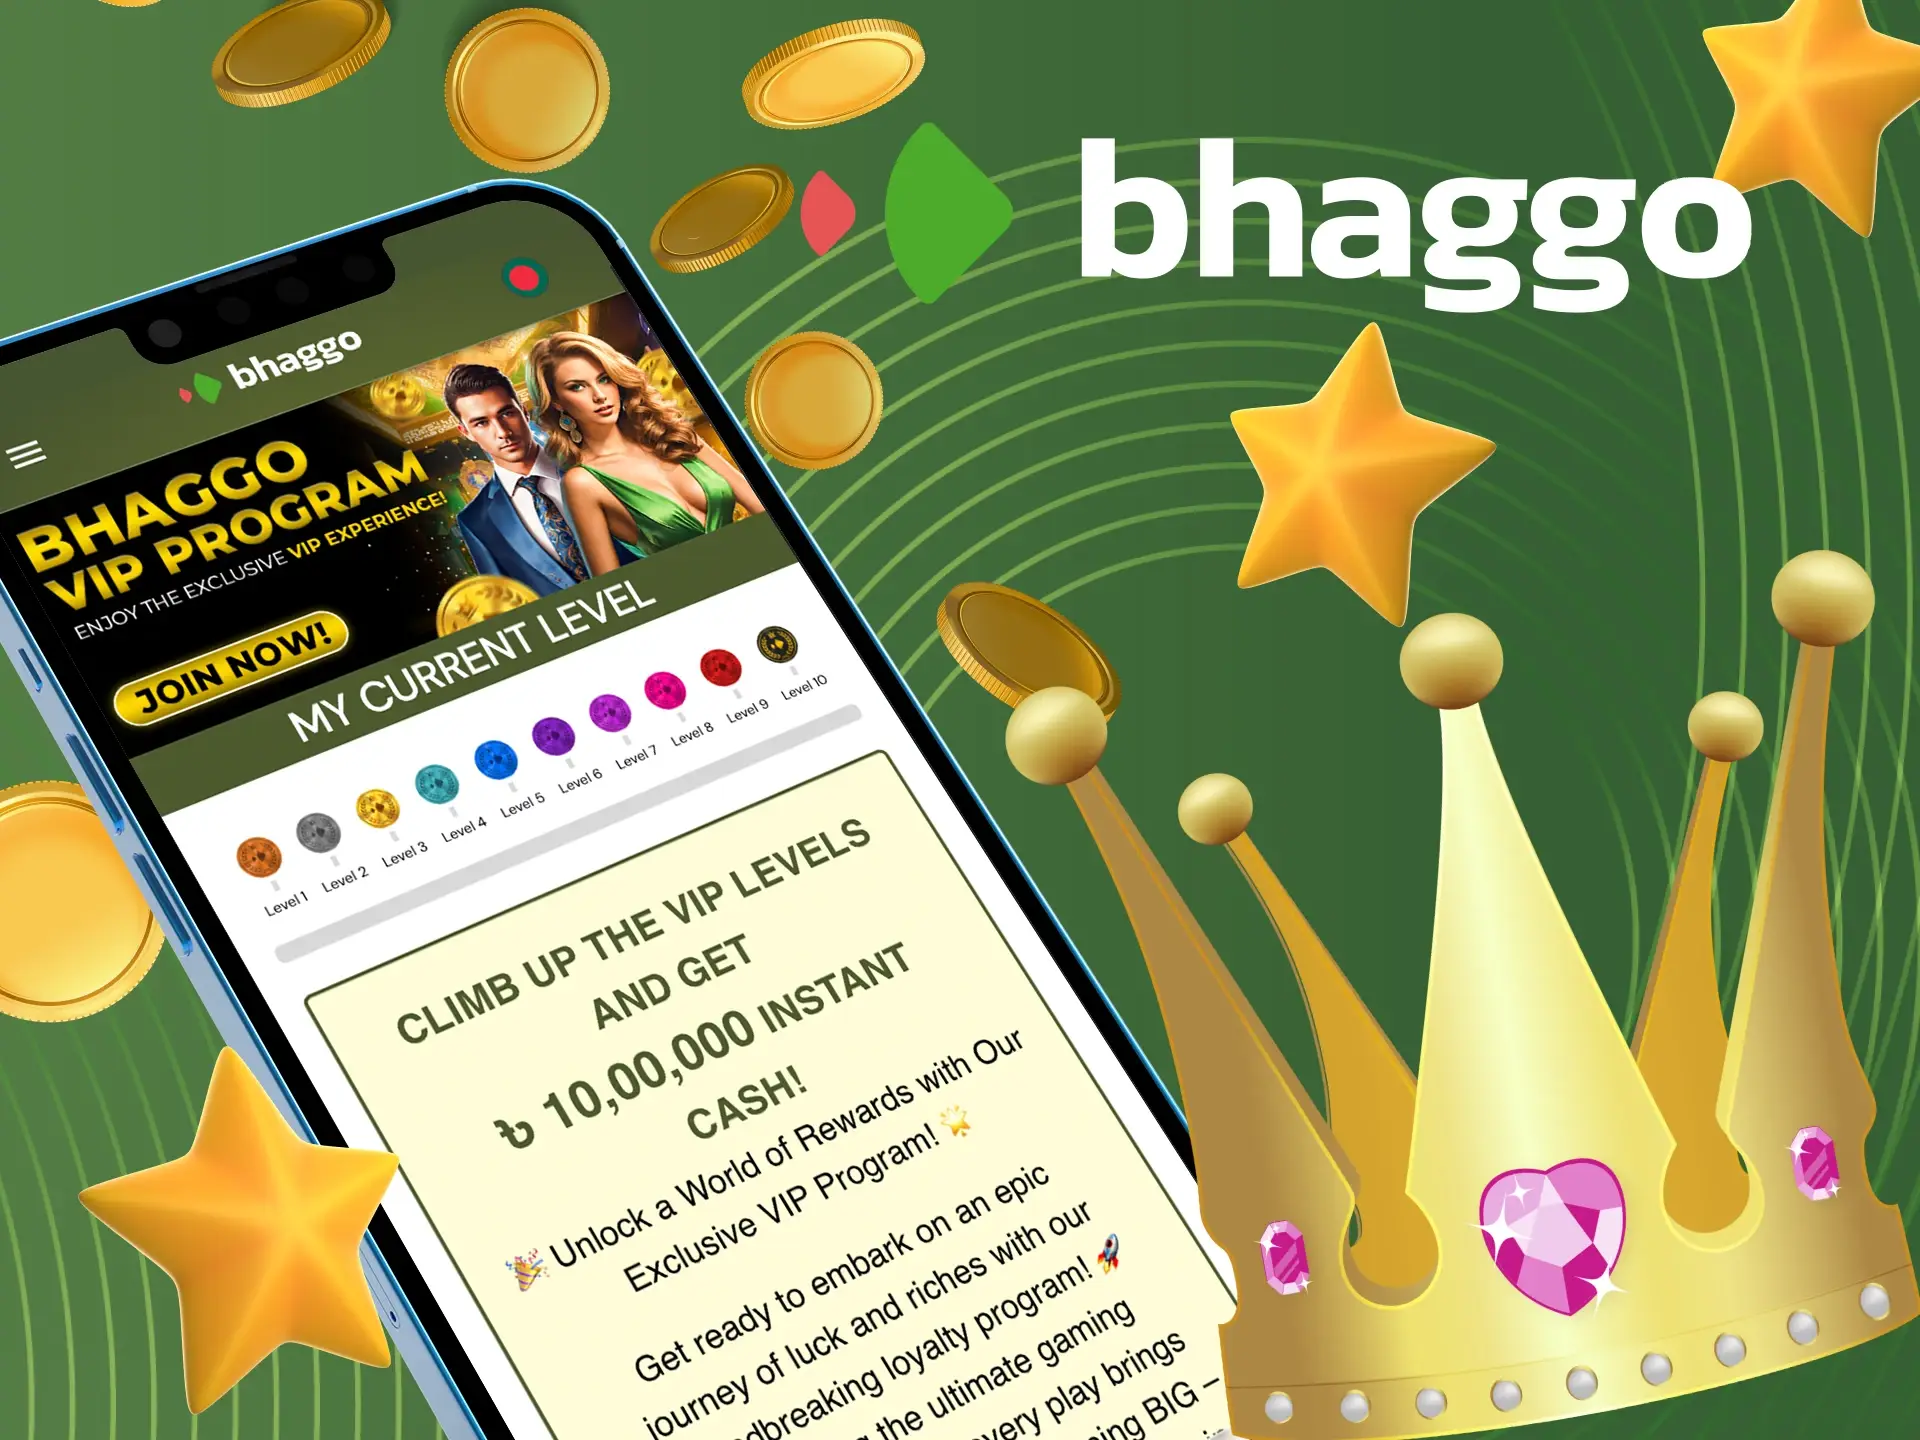 Benefits you can get as a member of Bhaggo VIP program.